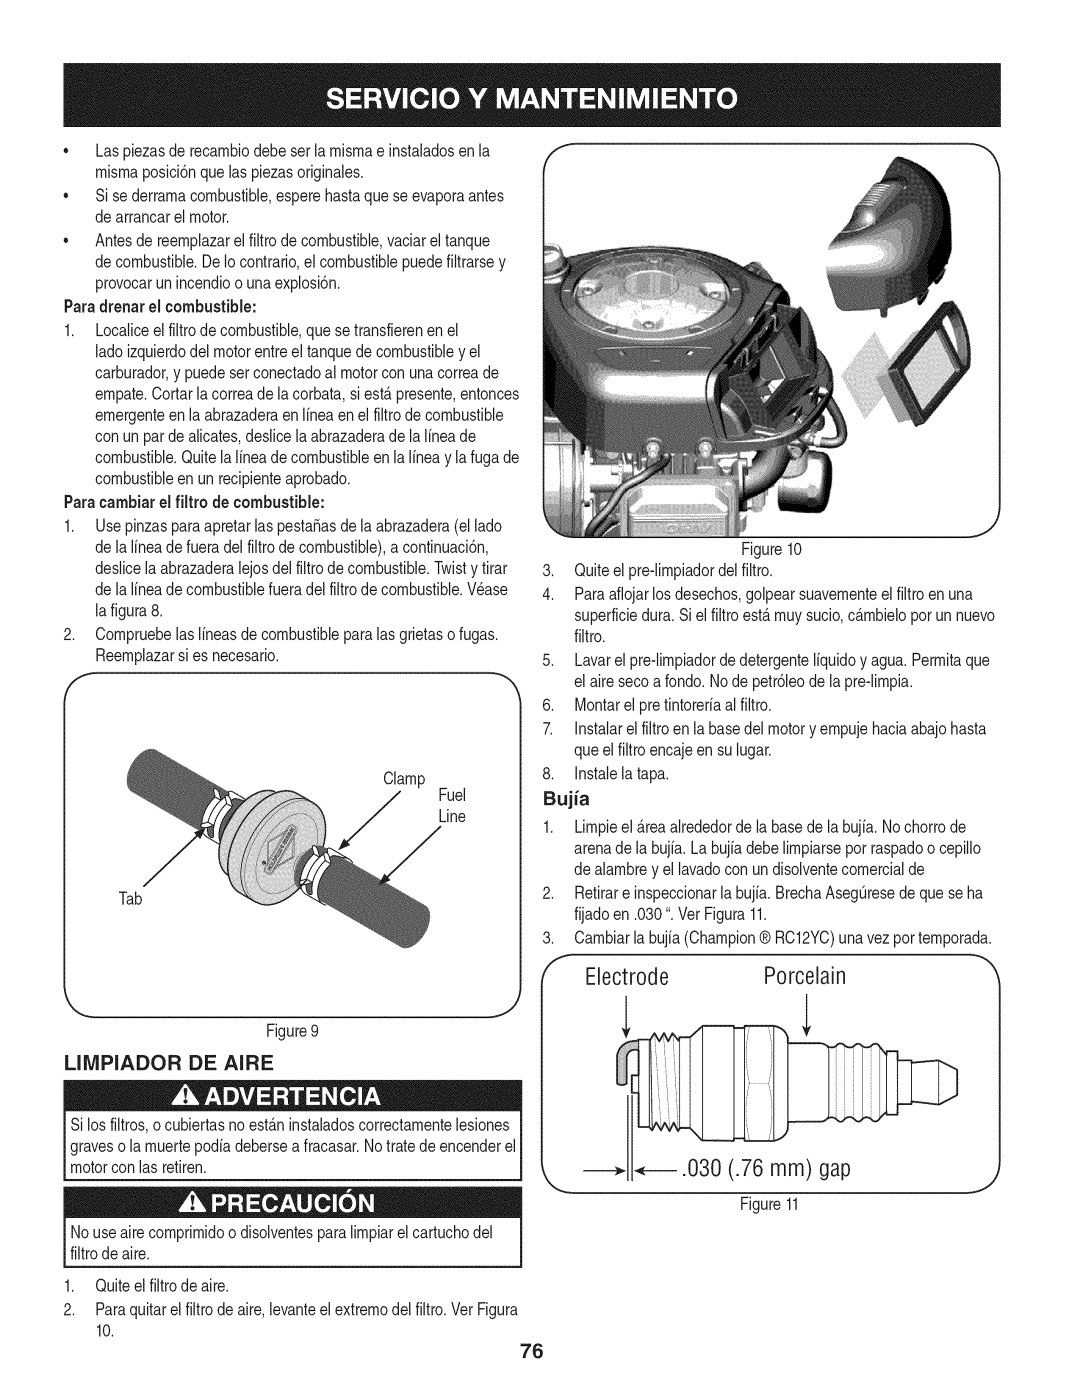 Craftsman 247.28901 manual dearrancarelmotor, provocarunincendiounaexplosi6n, Electrode Porcelain, 2 .030 .76 mm gap 